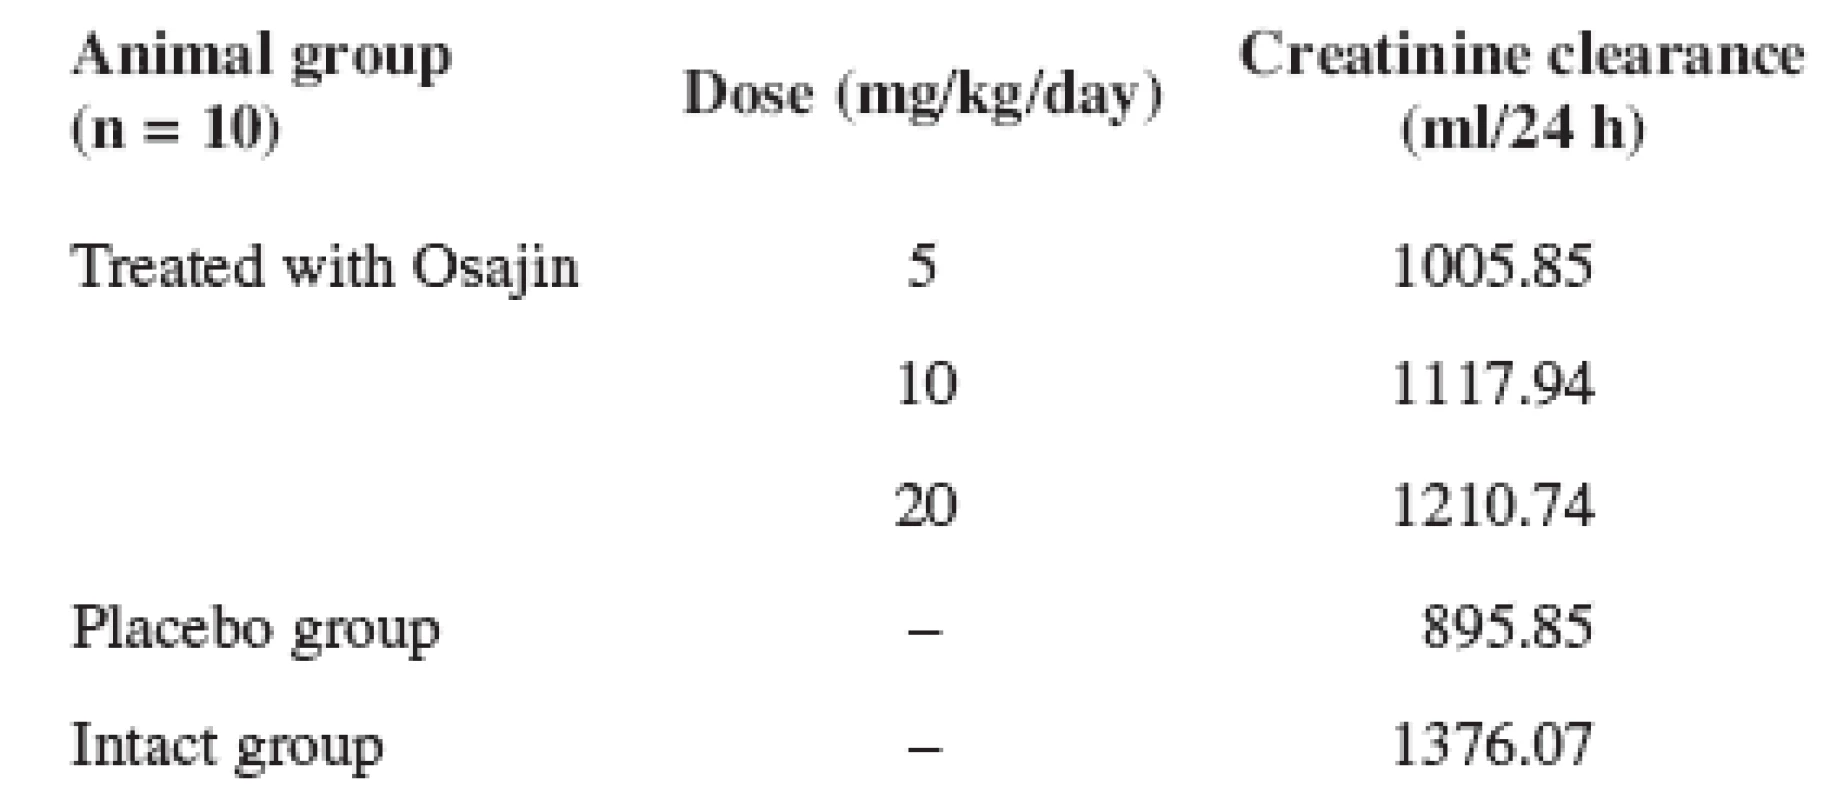 Effect of osajin administration on creatinine clearance/24 hours